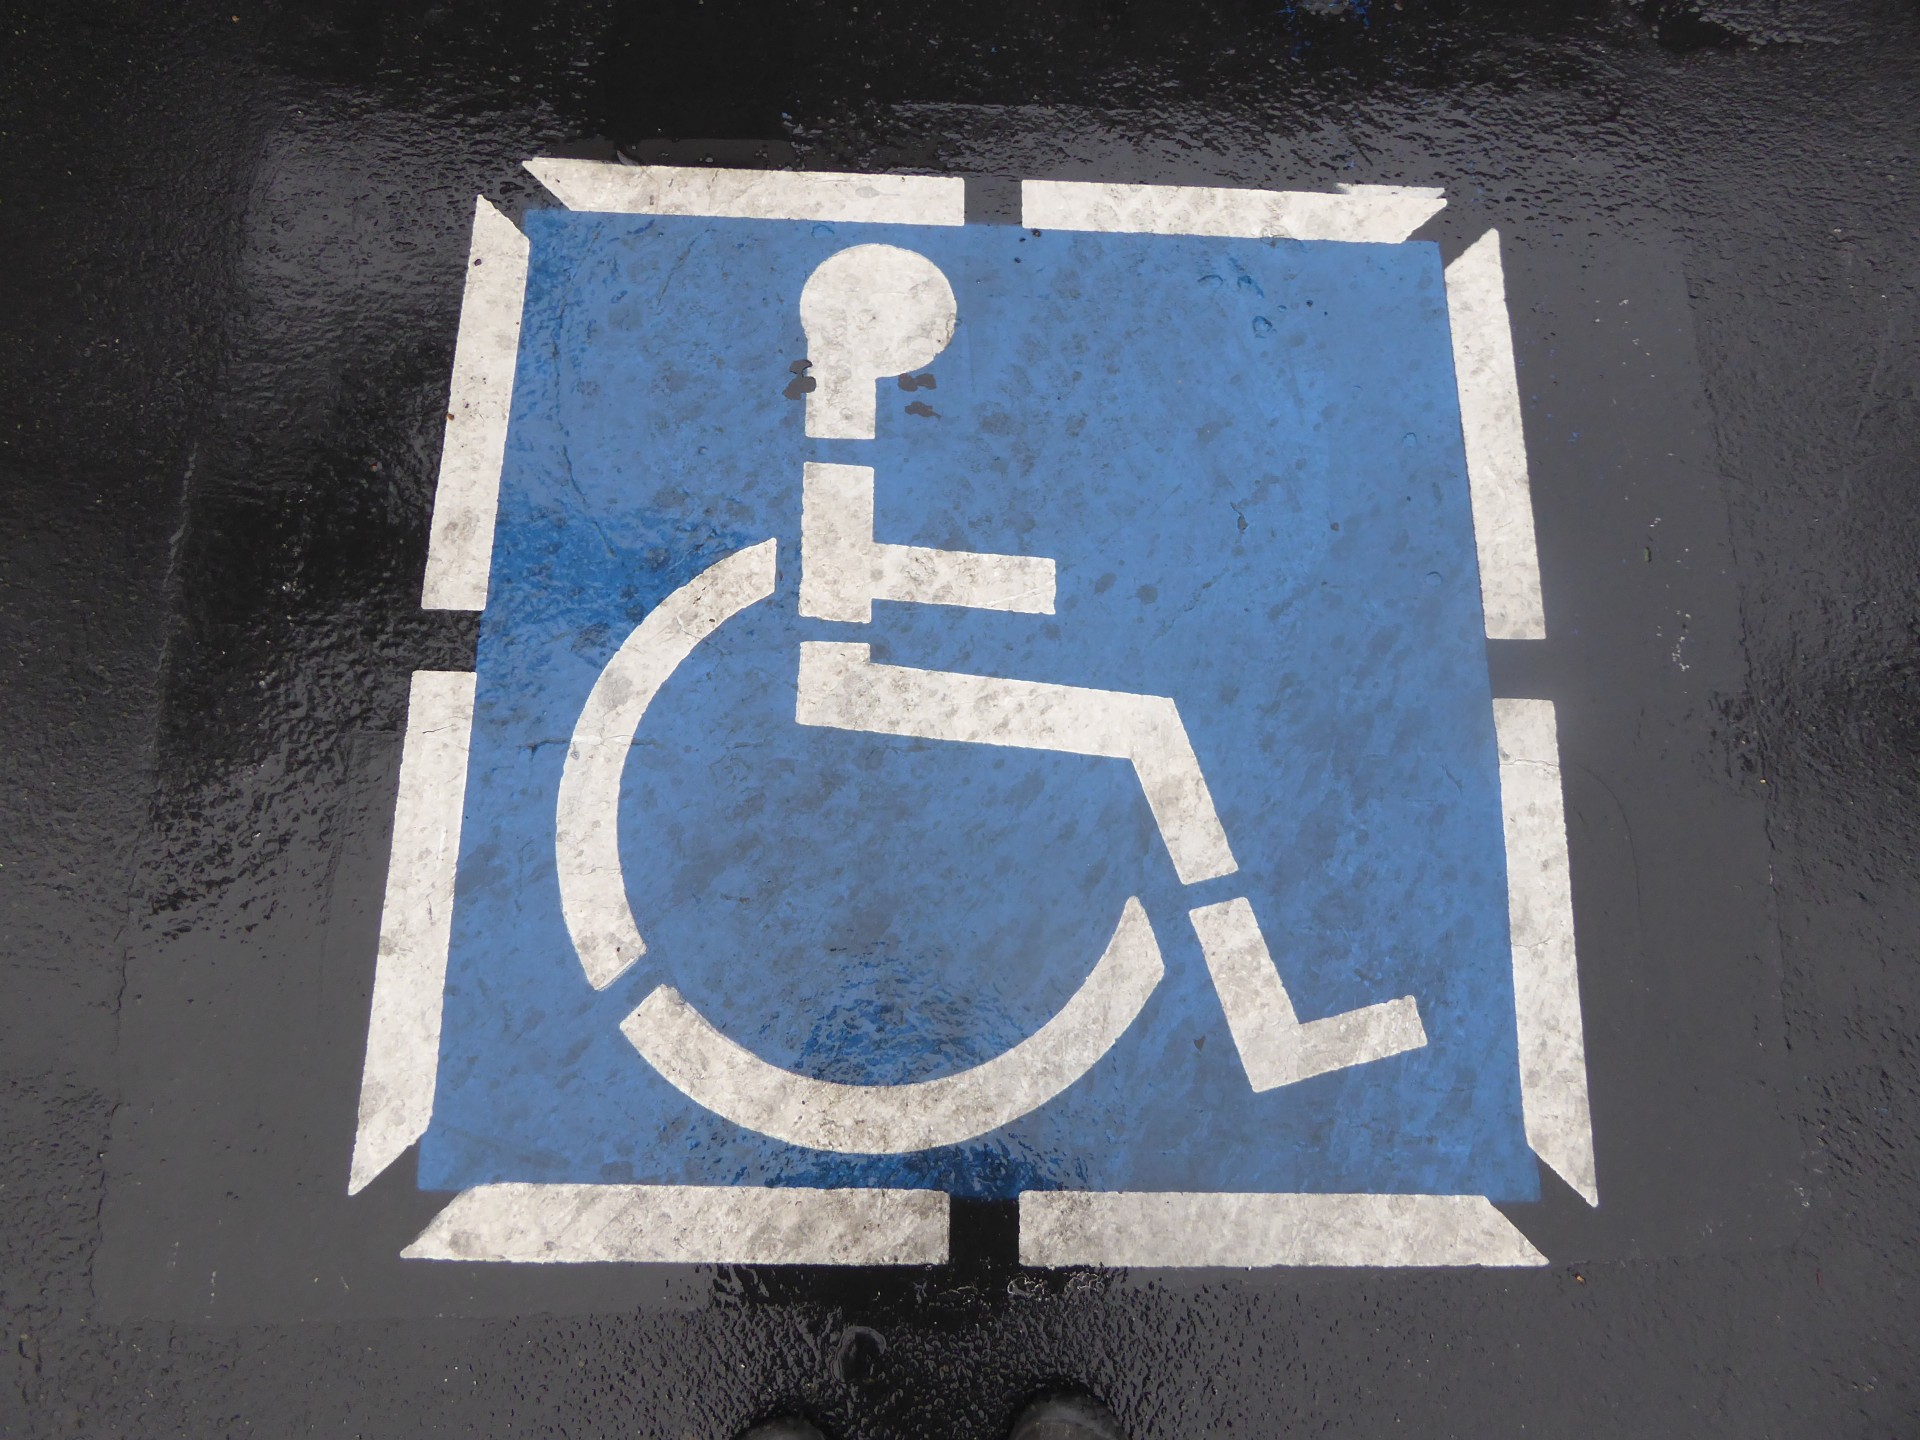 Handicap Parking Sign